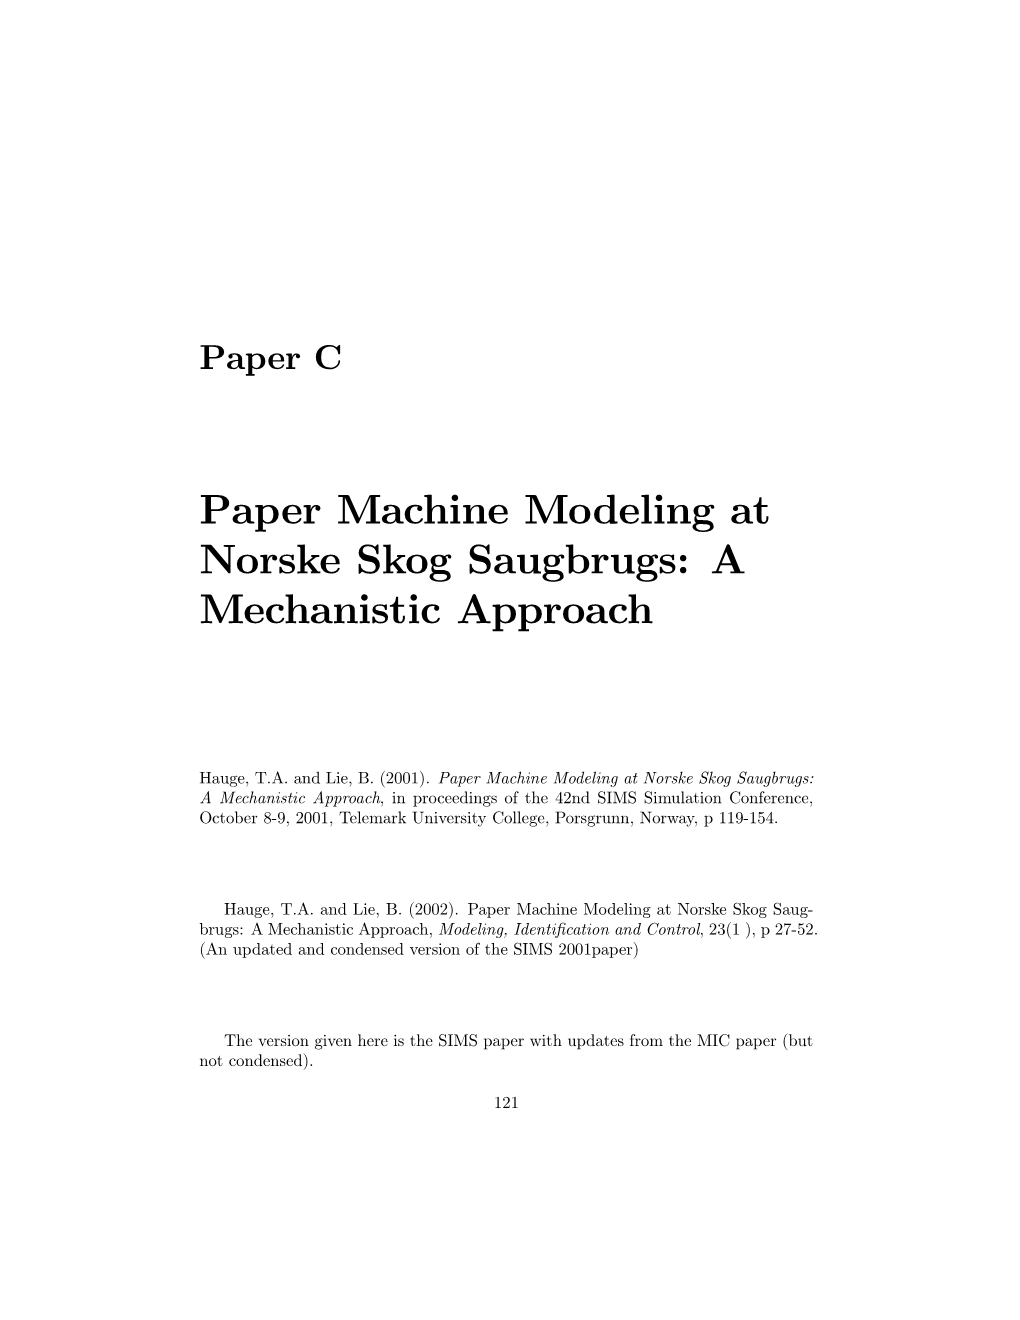 Paper Machine Modeling at Norske Skog Saugbrugs: a Mechanistic Approach